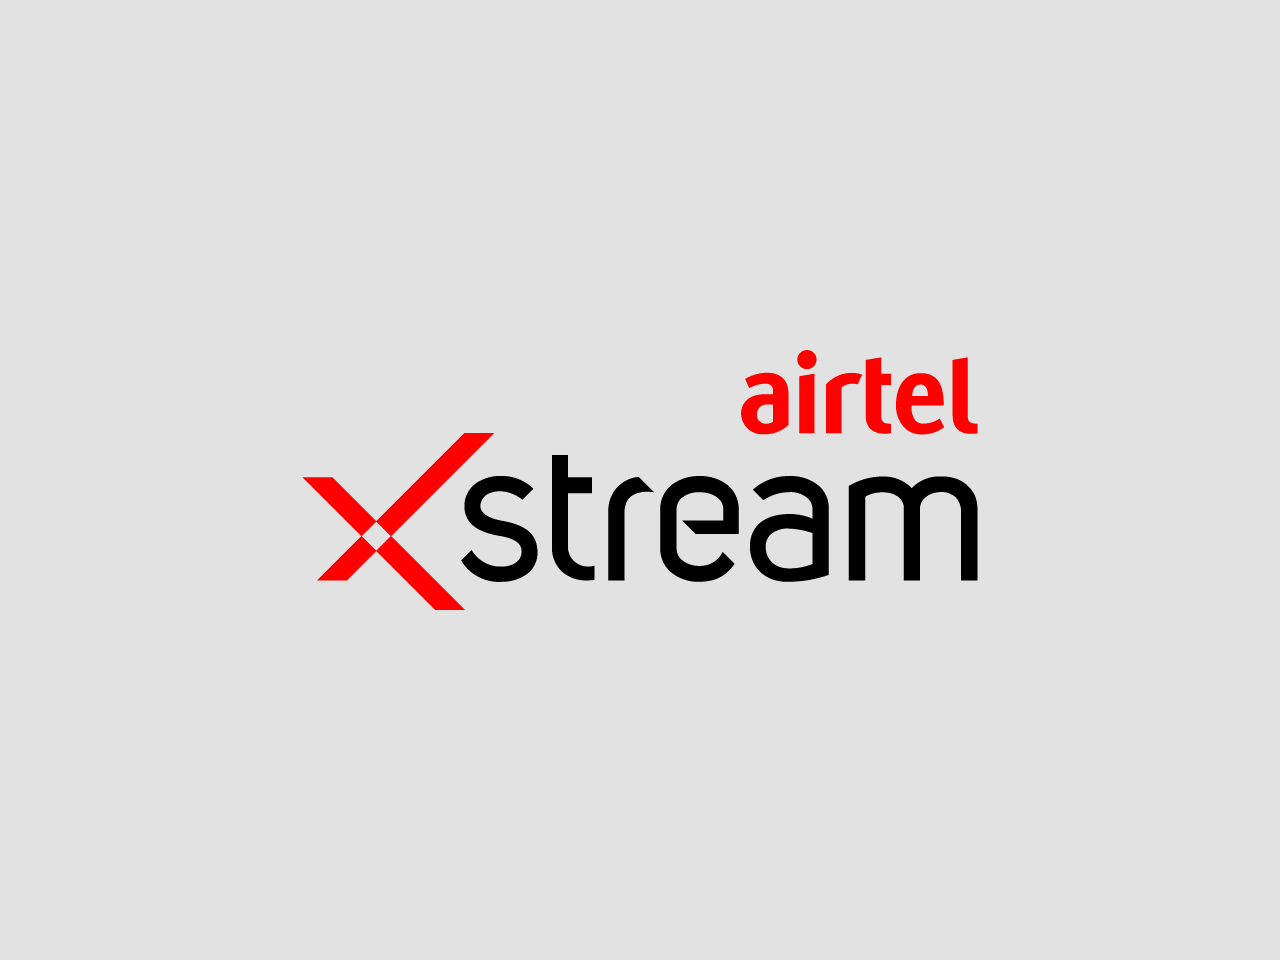 airtel tv is now airtel xstream